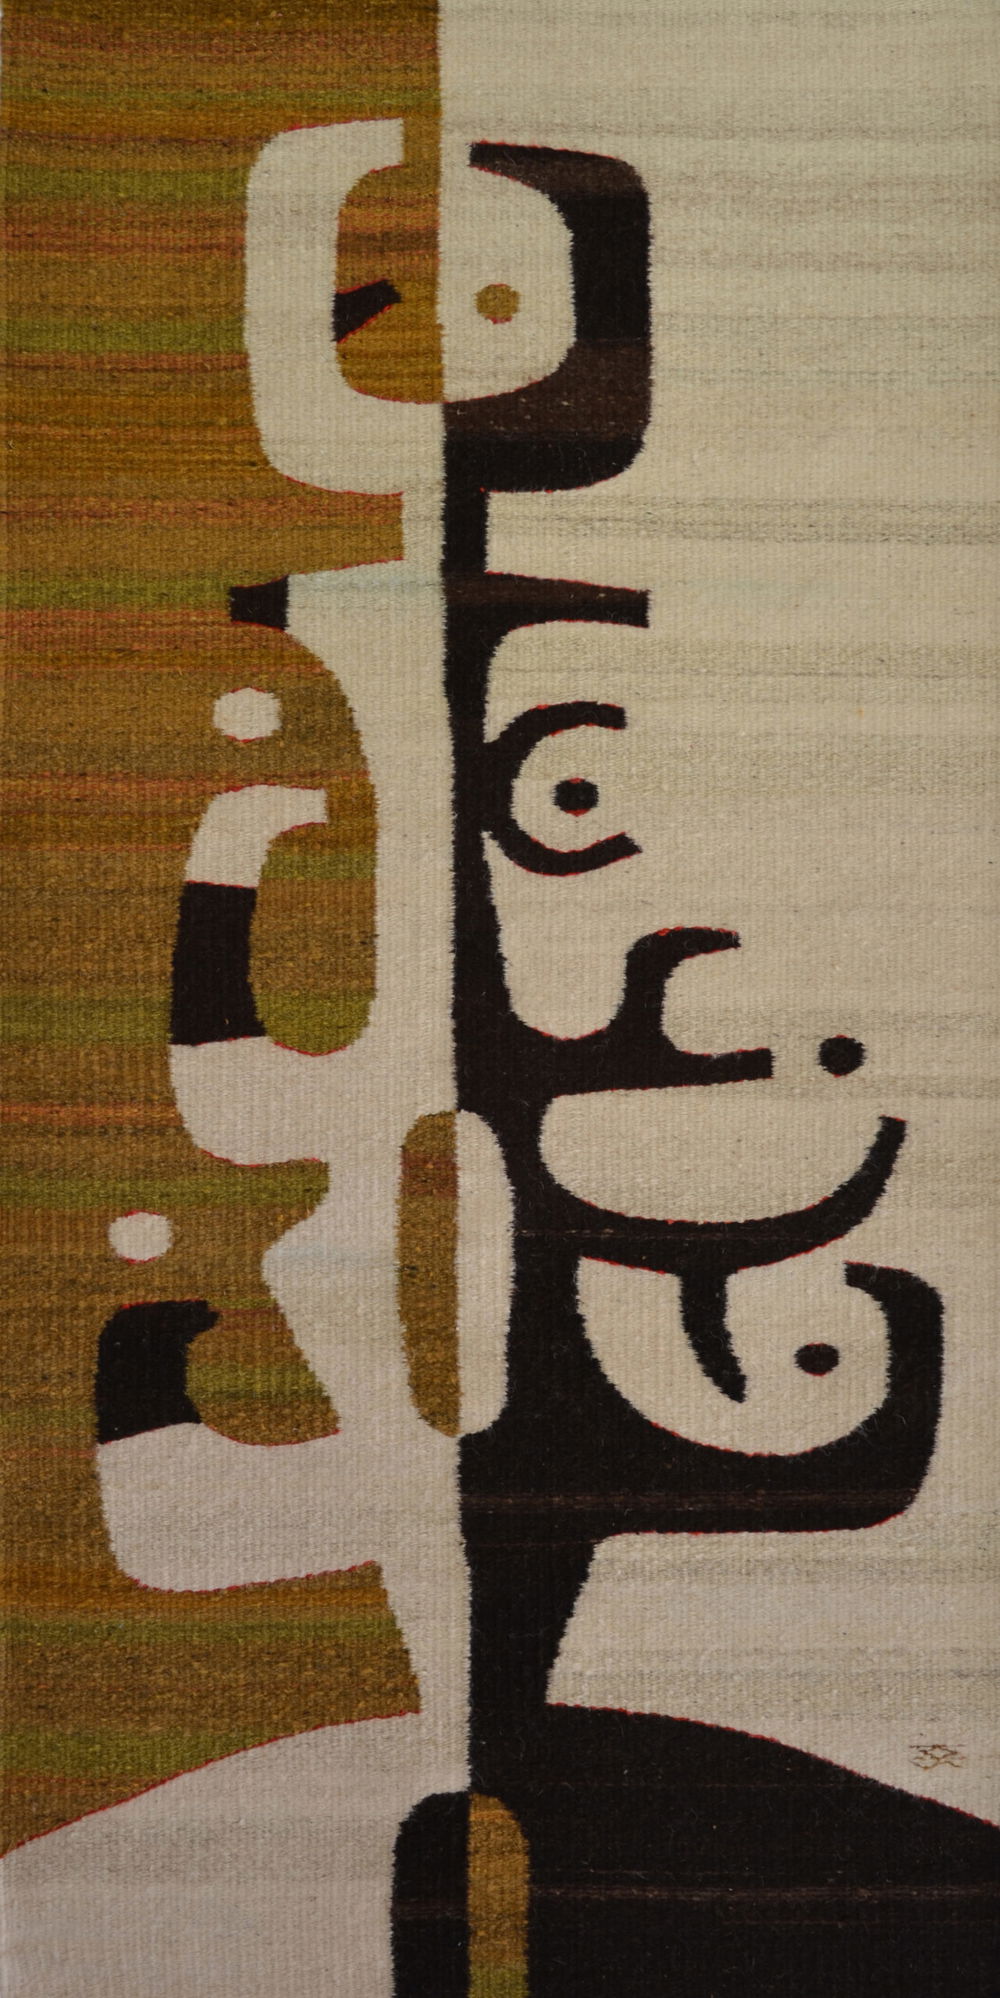 Piñon II: Tapestry design by Sandra Martinez, woven by Wence Martinez, handspun wool, 50 x 28 inches, 2015.